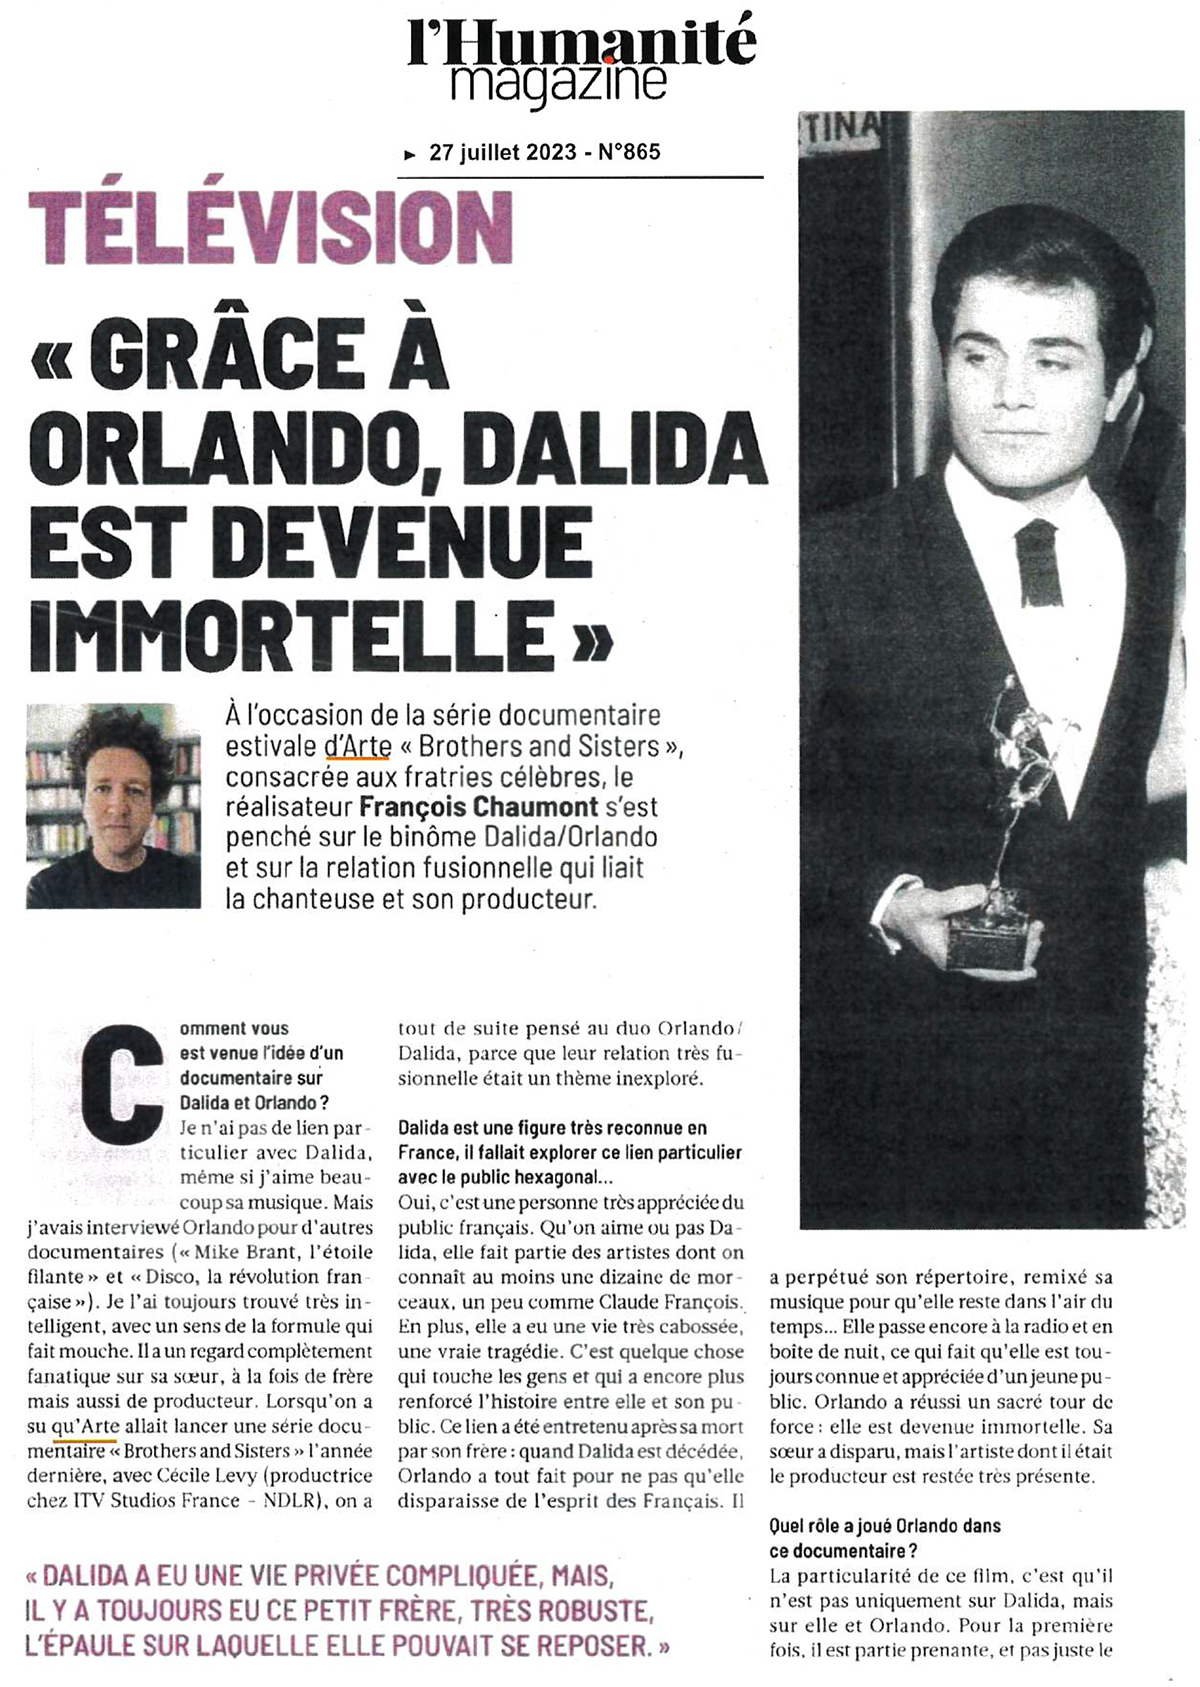 LHumanité magazine Dalida